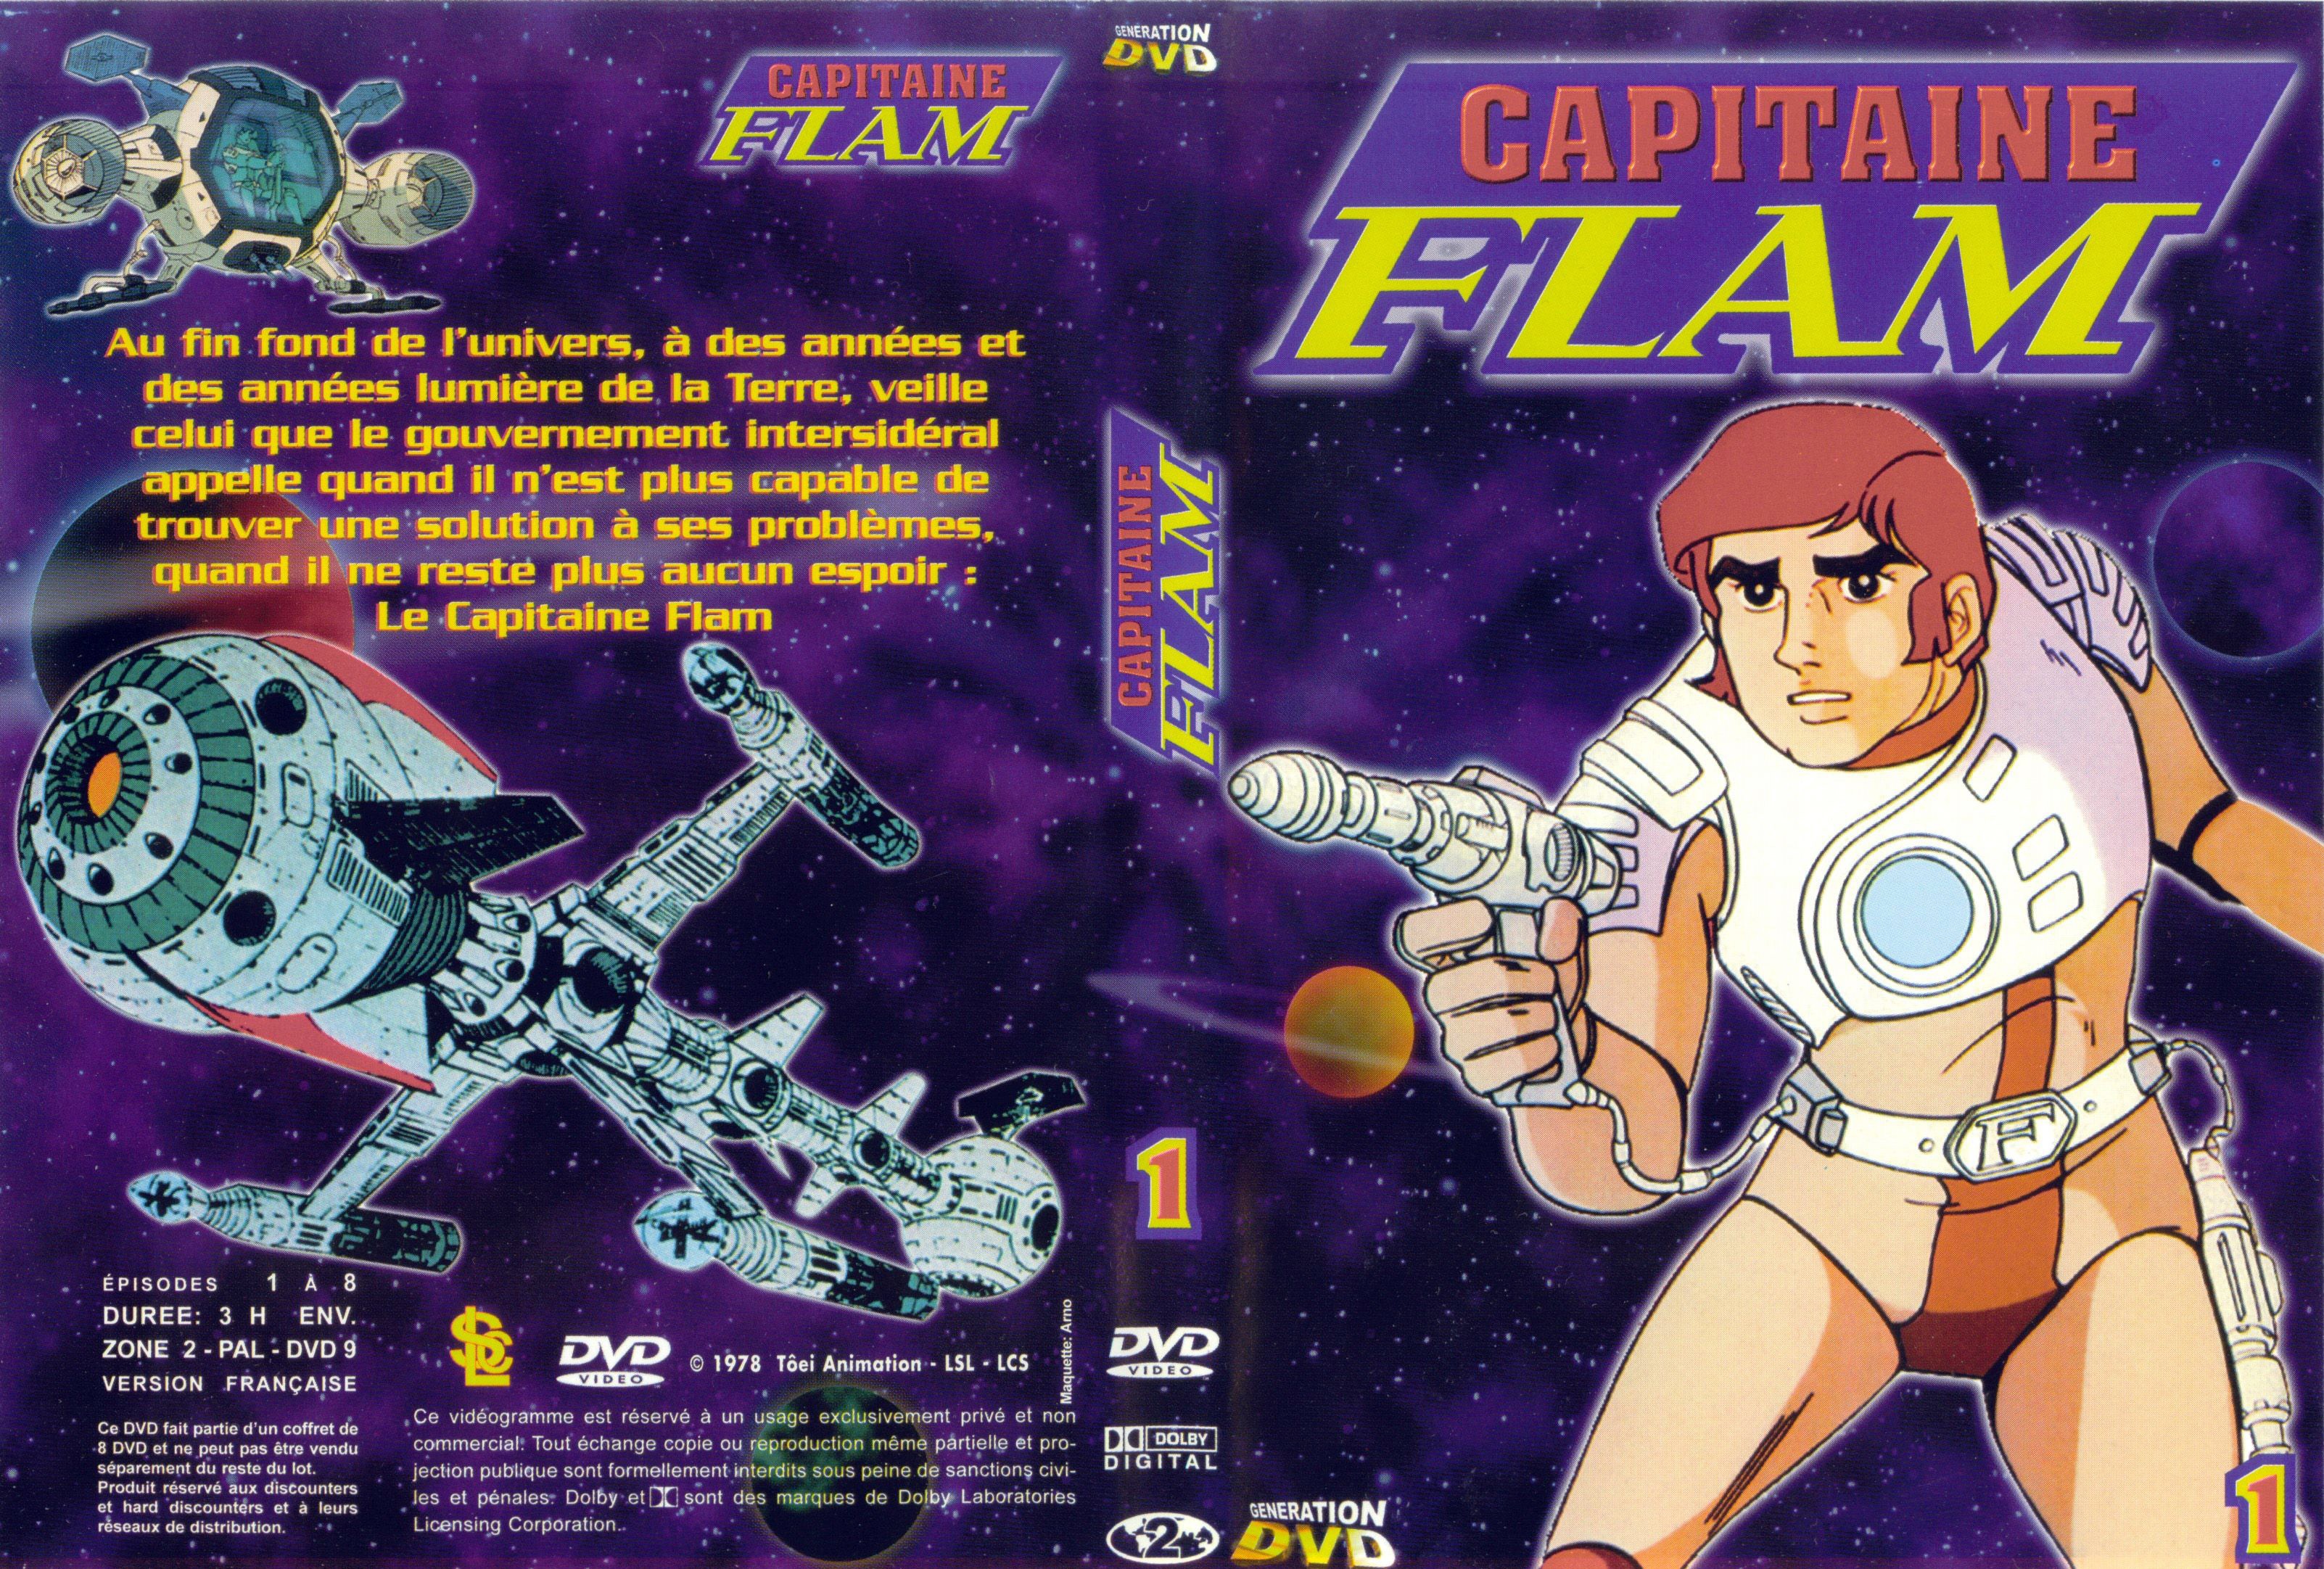 Jaquette DVD Capitaine Flam vol 1 (GENERATION DVD)